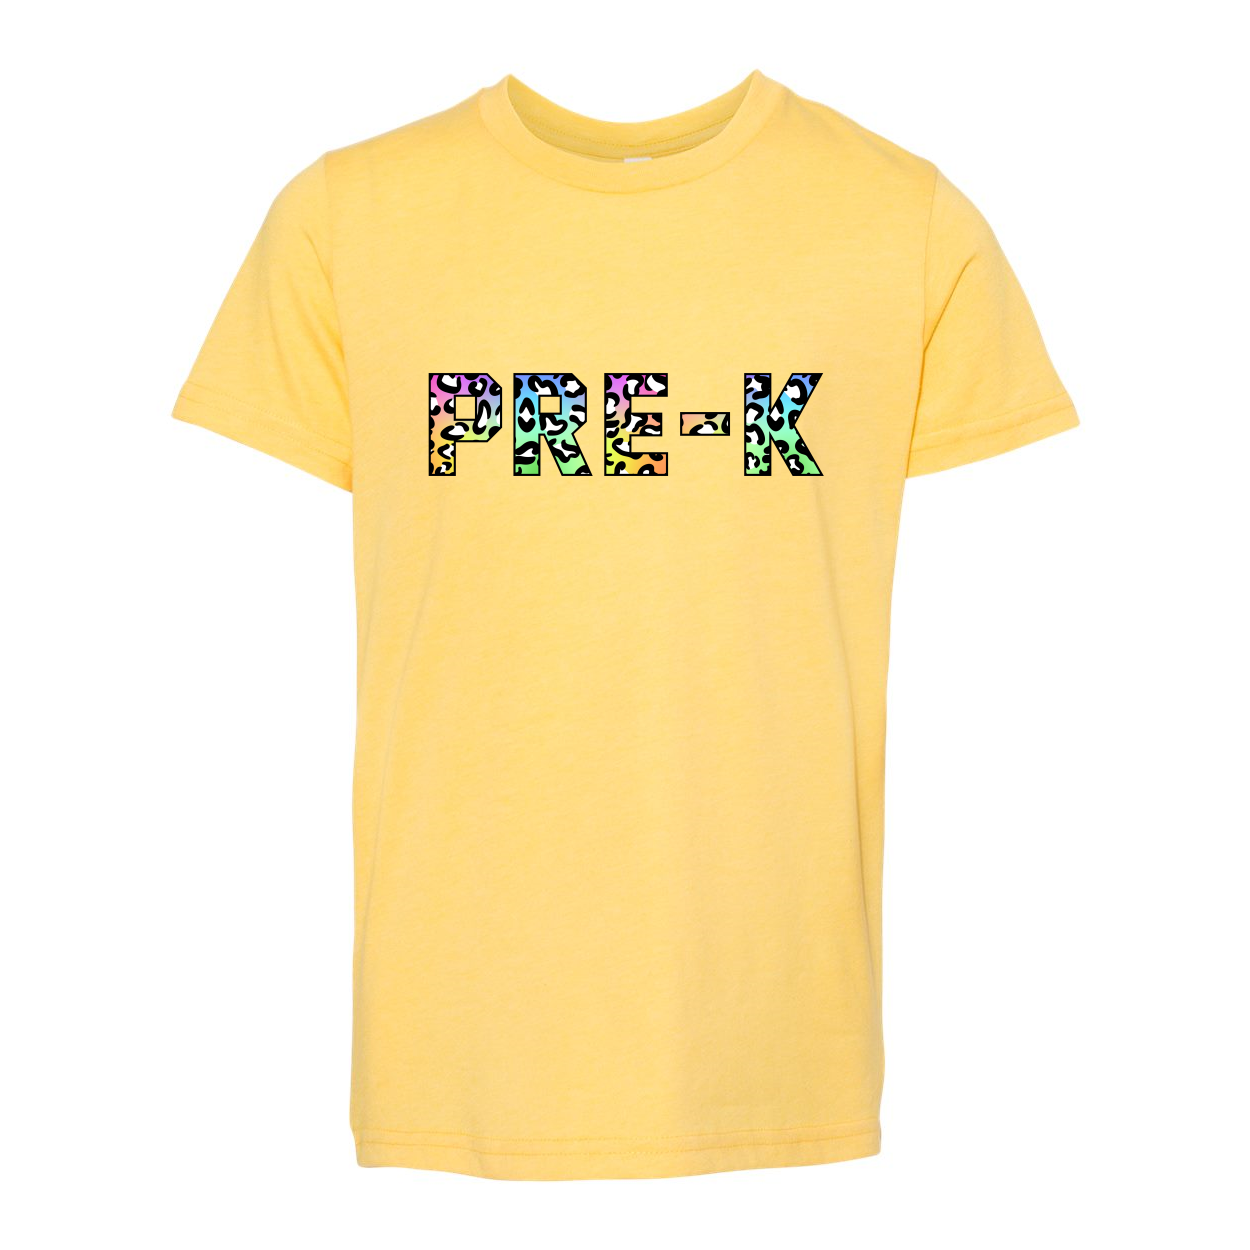 Pre-K YOUTH Colorful Animal Print T-Shirt